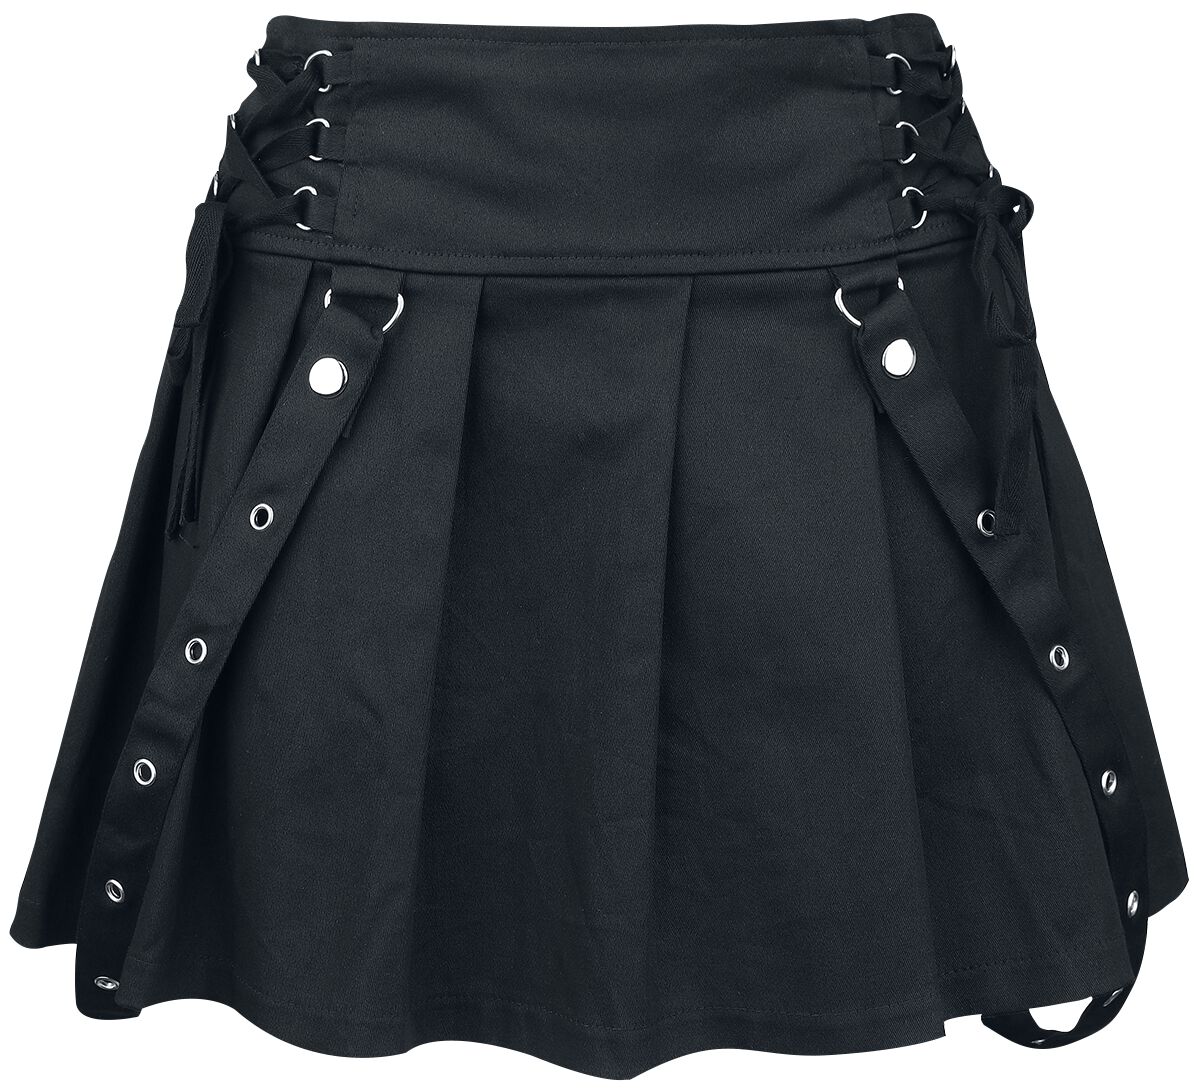 Image of Minigonna Gothic di Poizen Industries - Rebellious skirt - S a XXL - Donna - nero